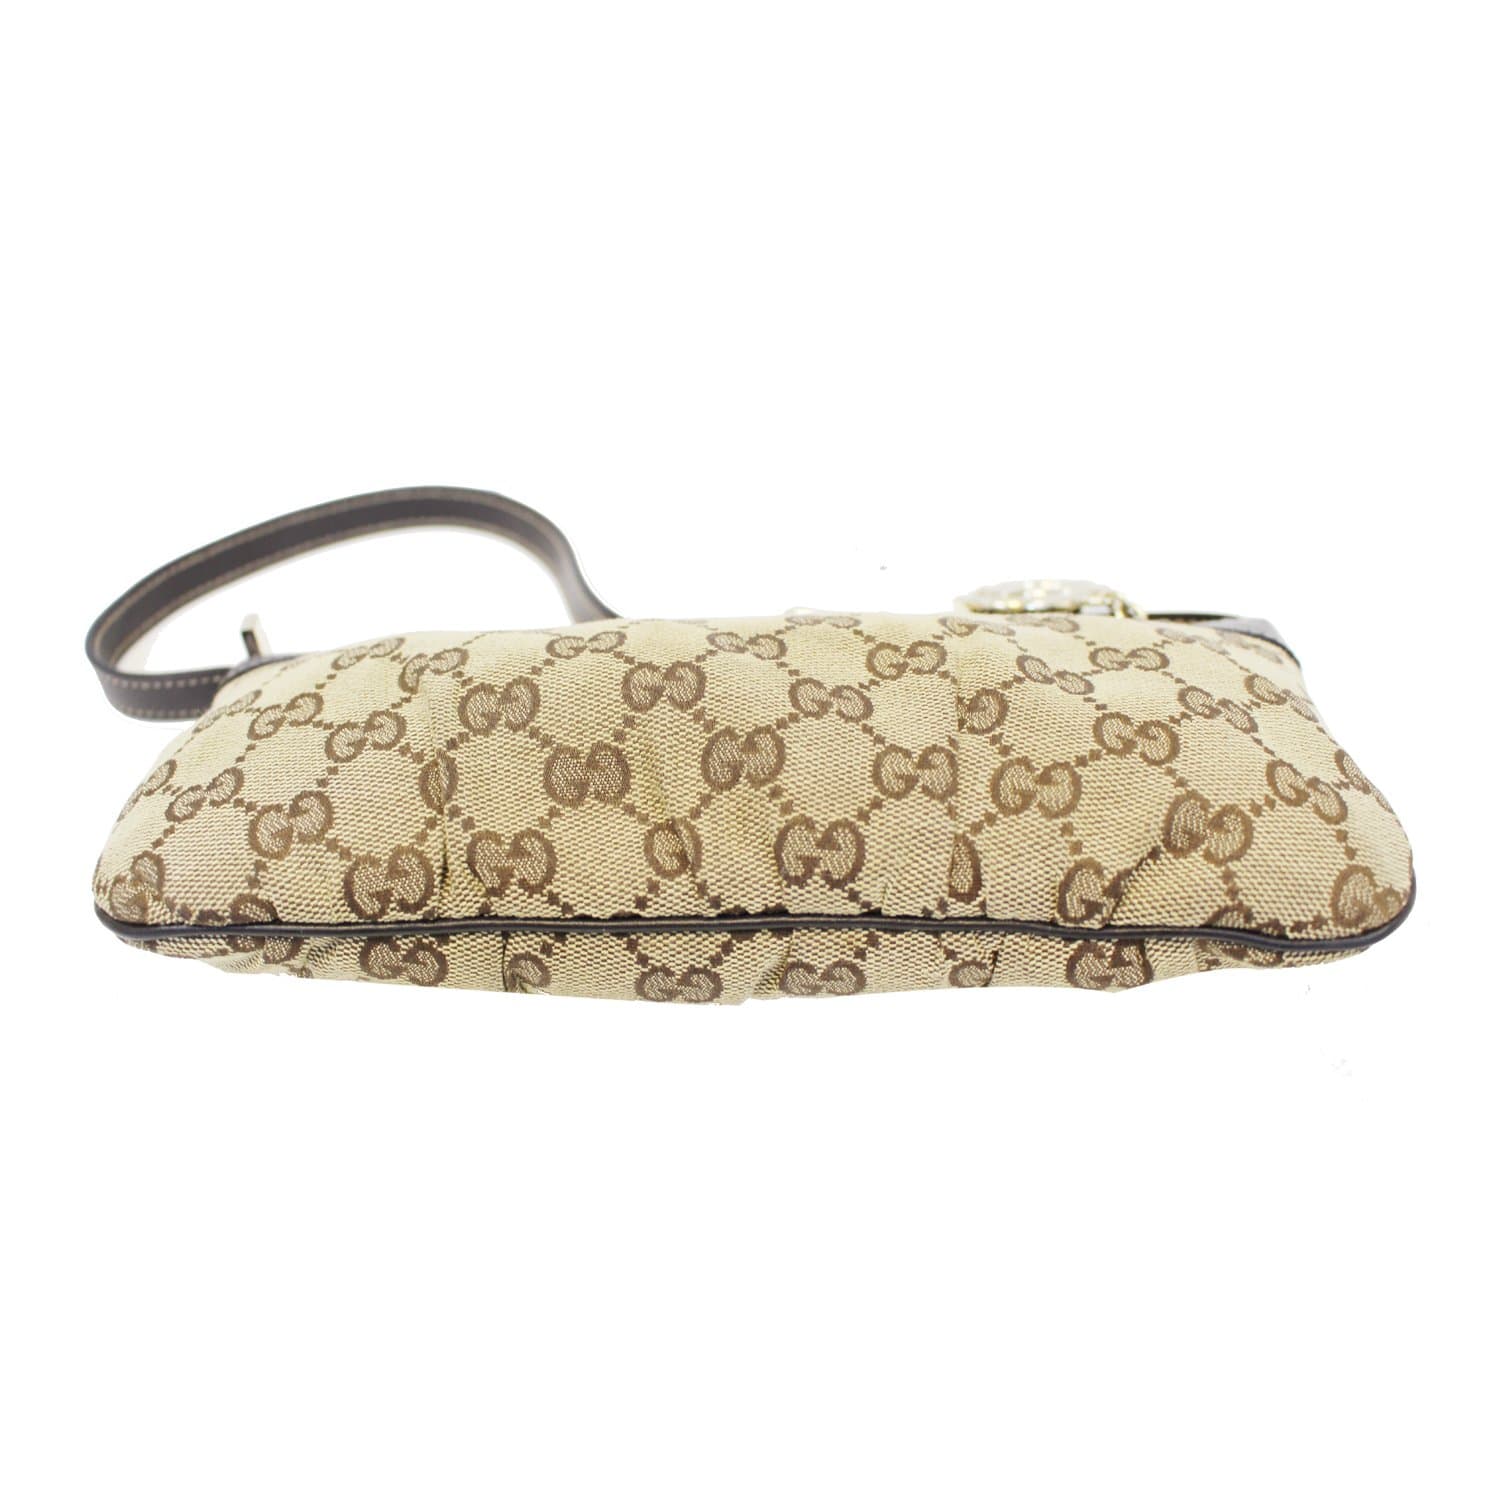 Gucci Interlocking GG Beige Small Shoulder Bag